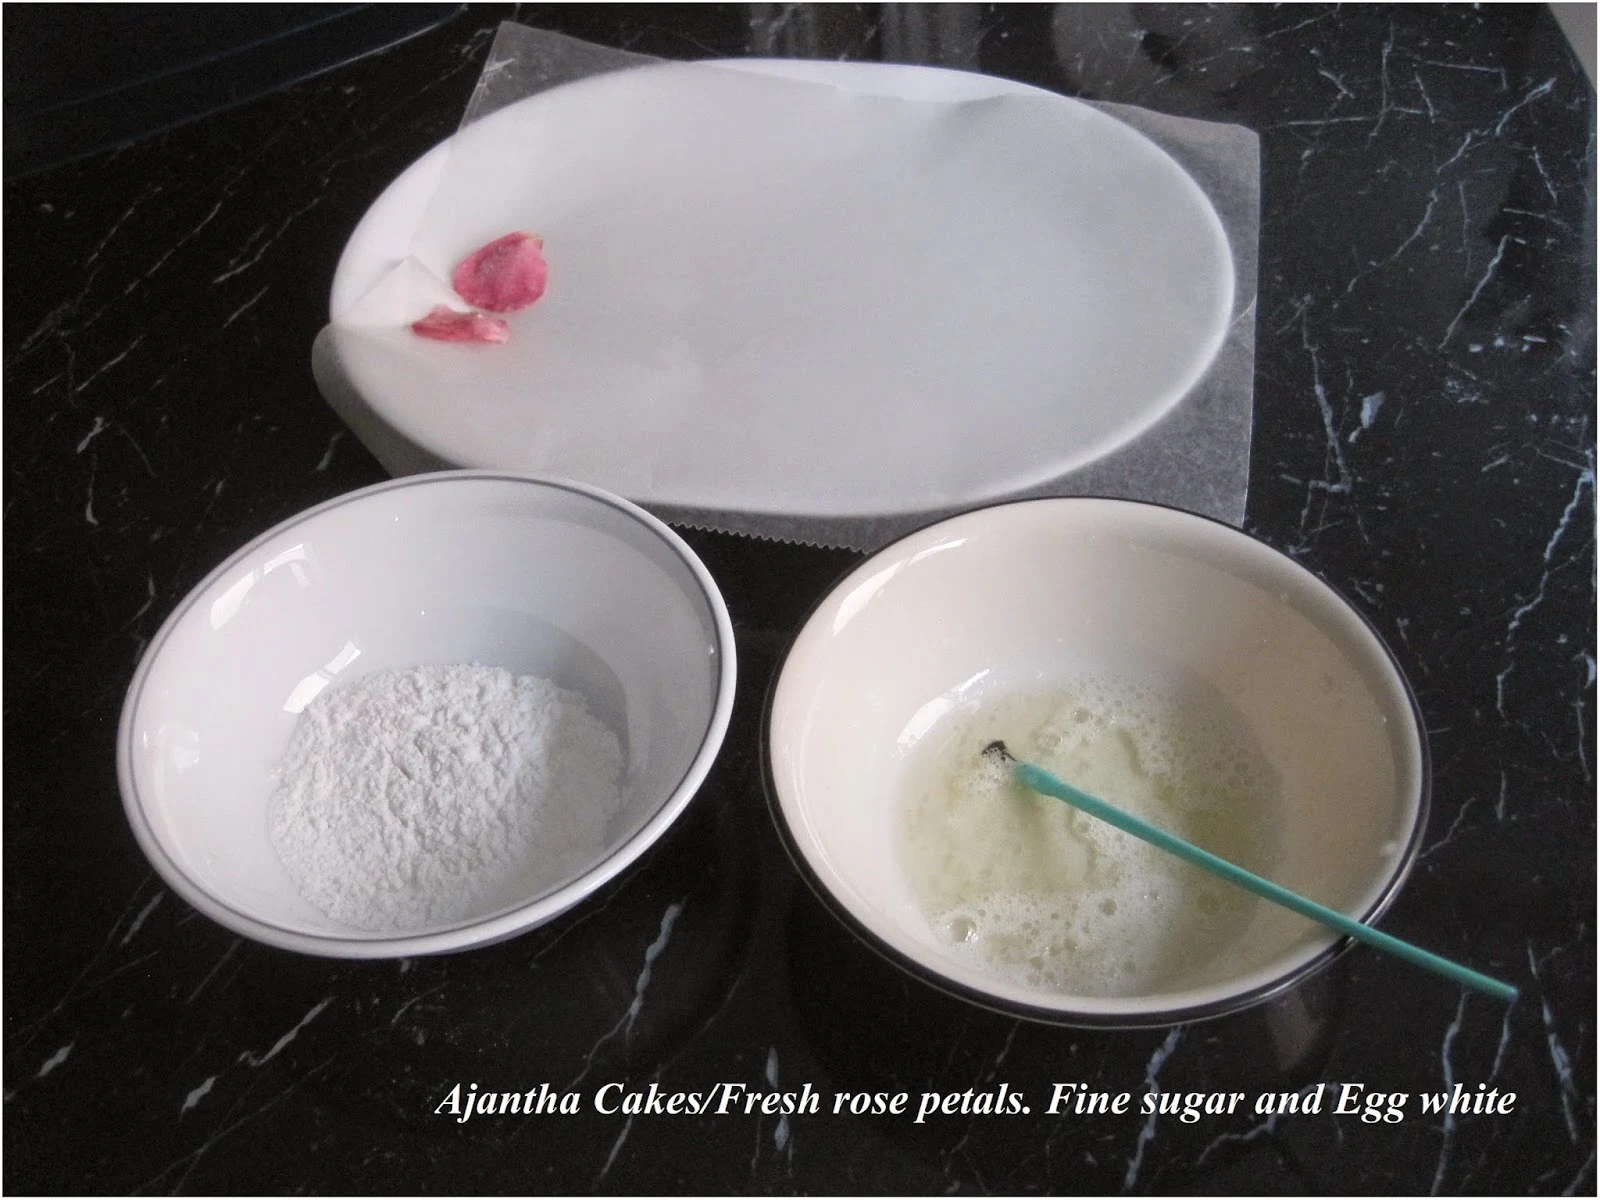 Ajantha Cakes/Fresh rose petals, fine sugar and egg white